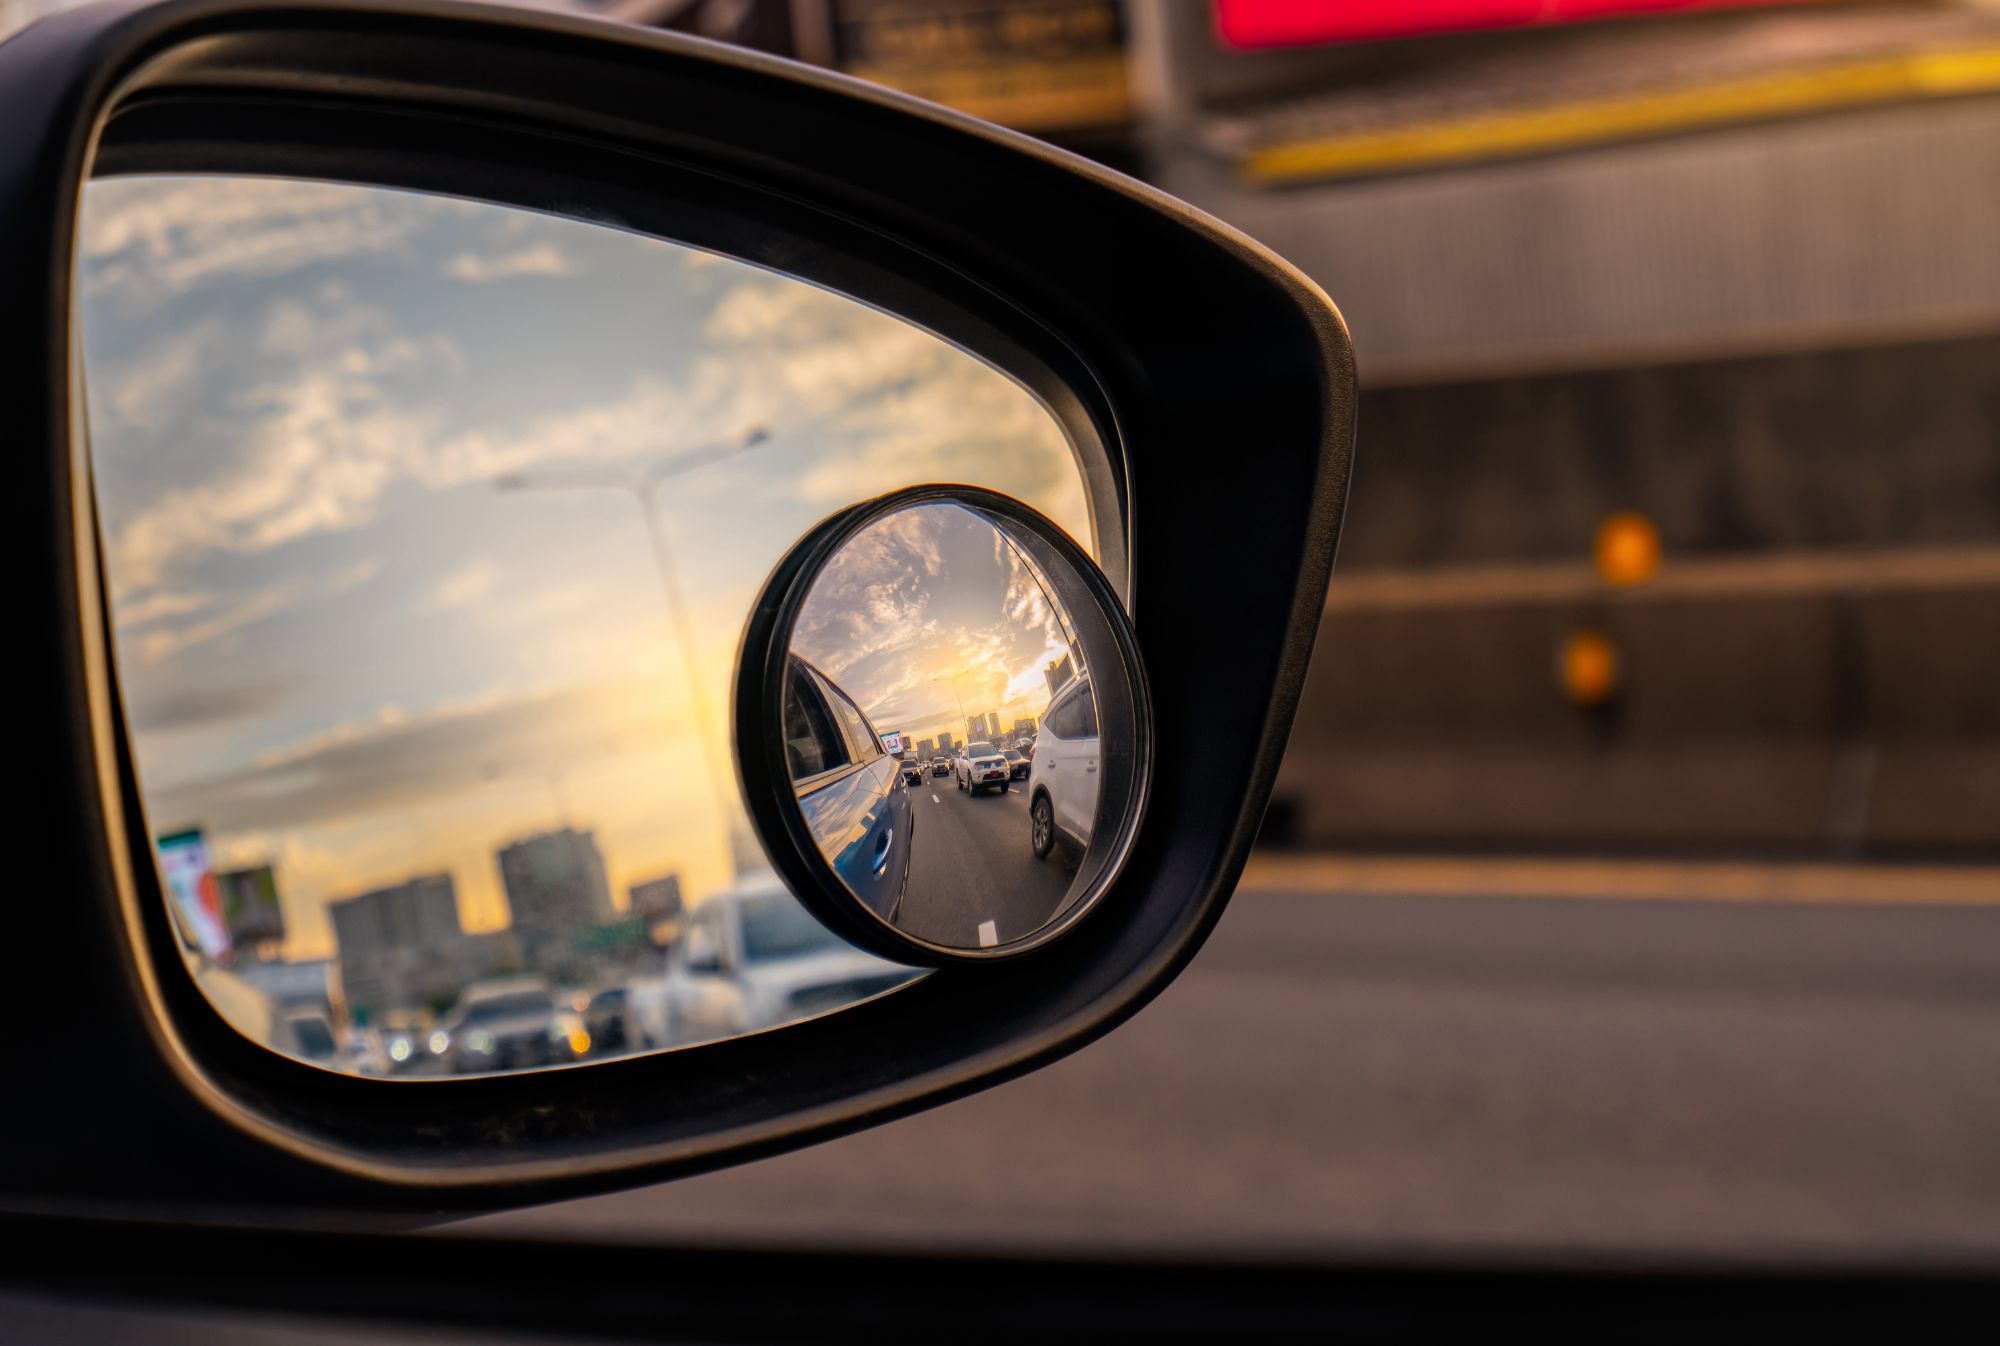 Car side view mirror